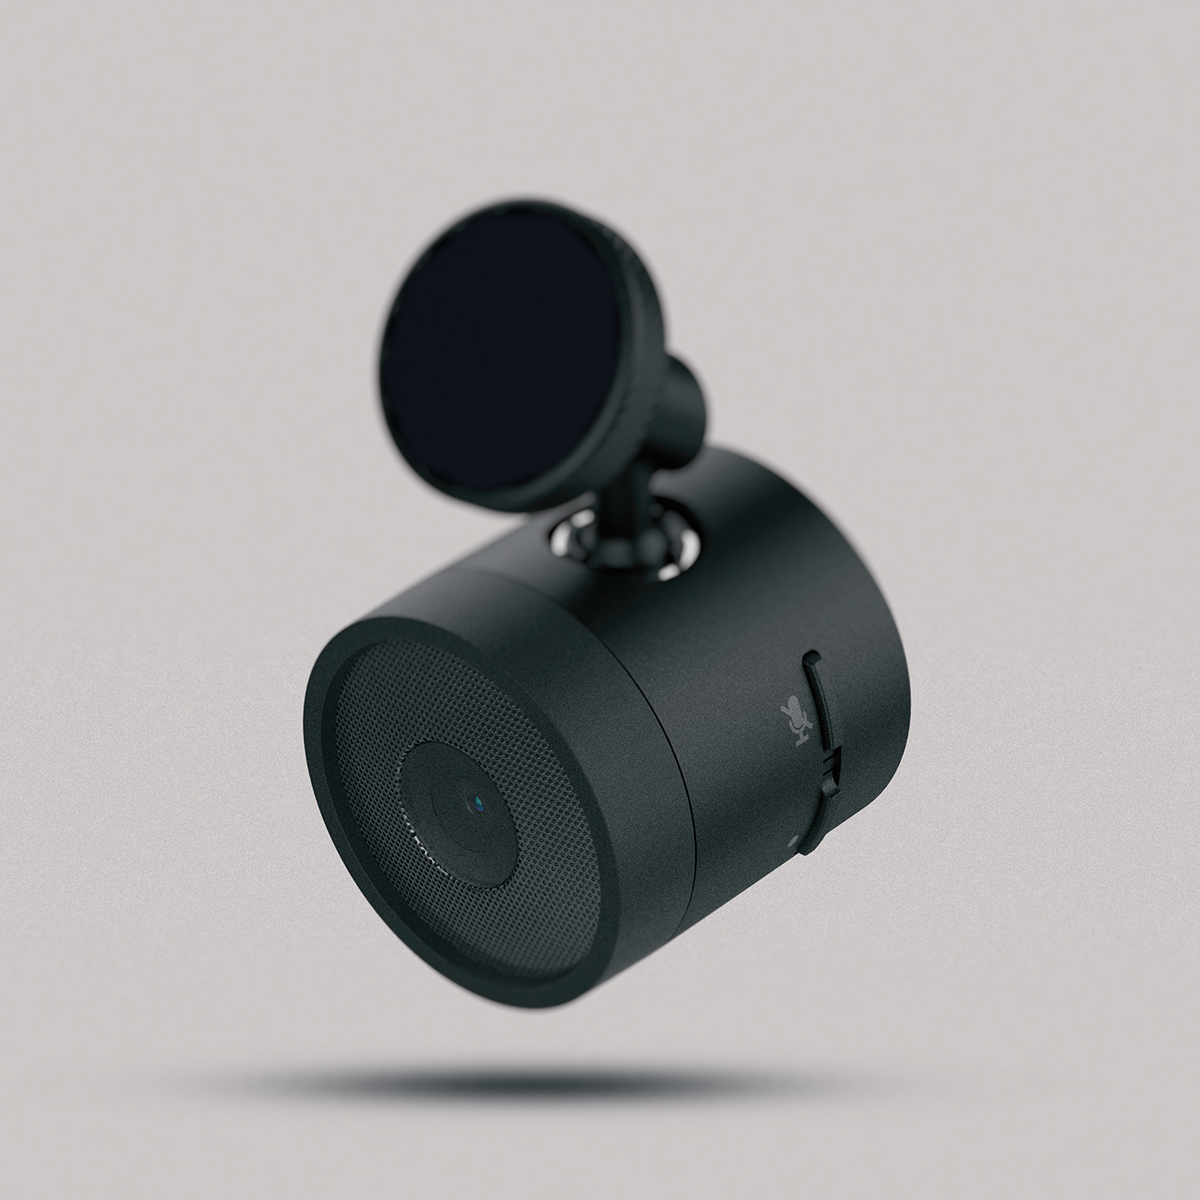 Garmin speak plus Amazon Alexa gps navigation Dash camera speaker